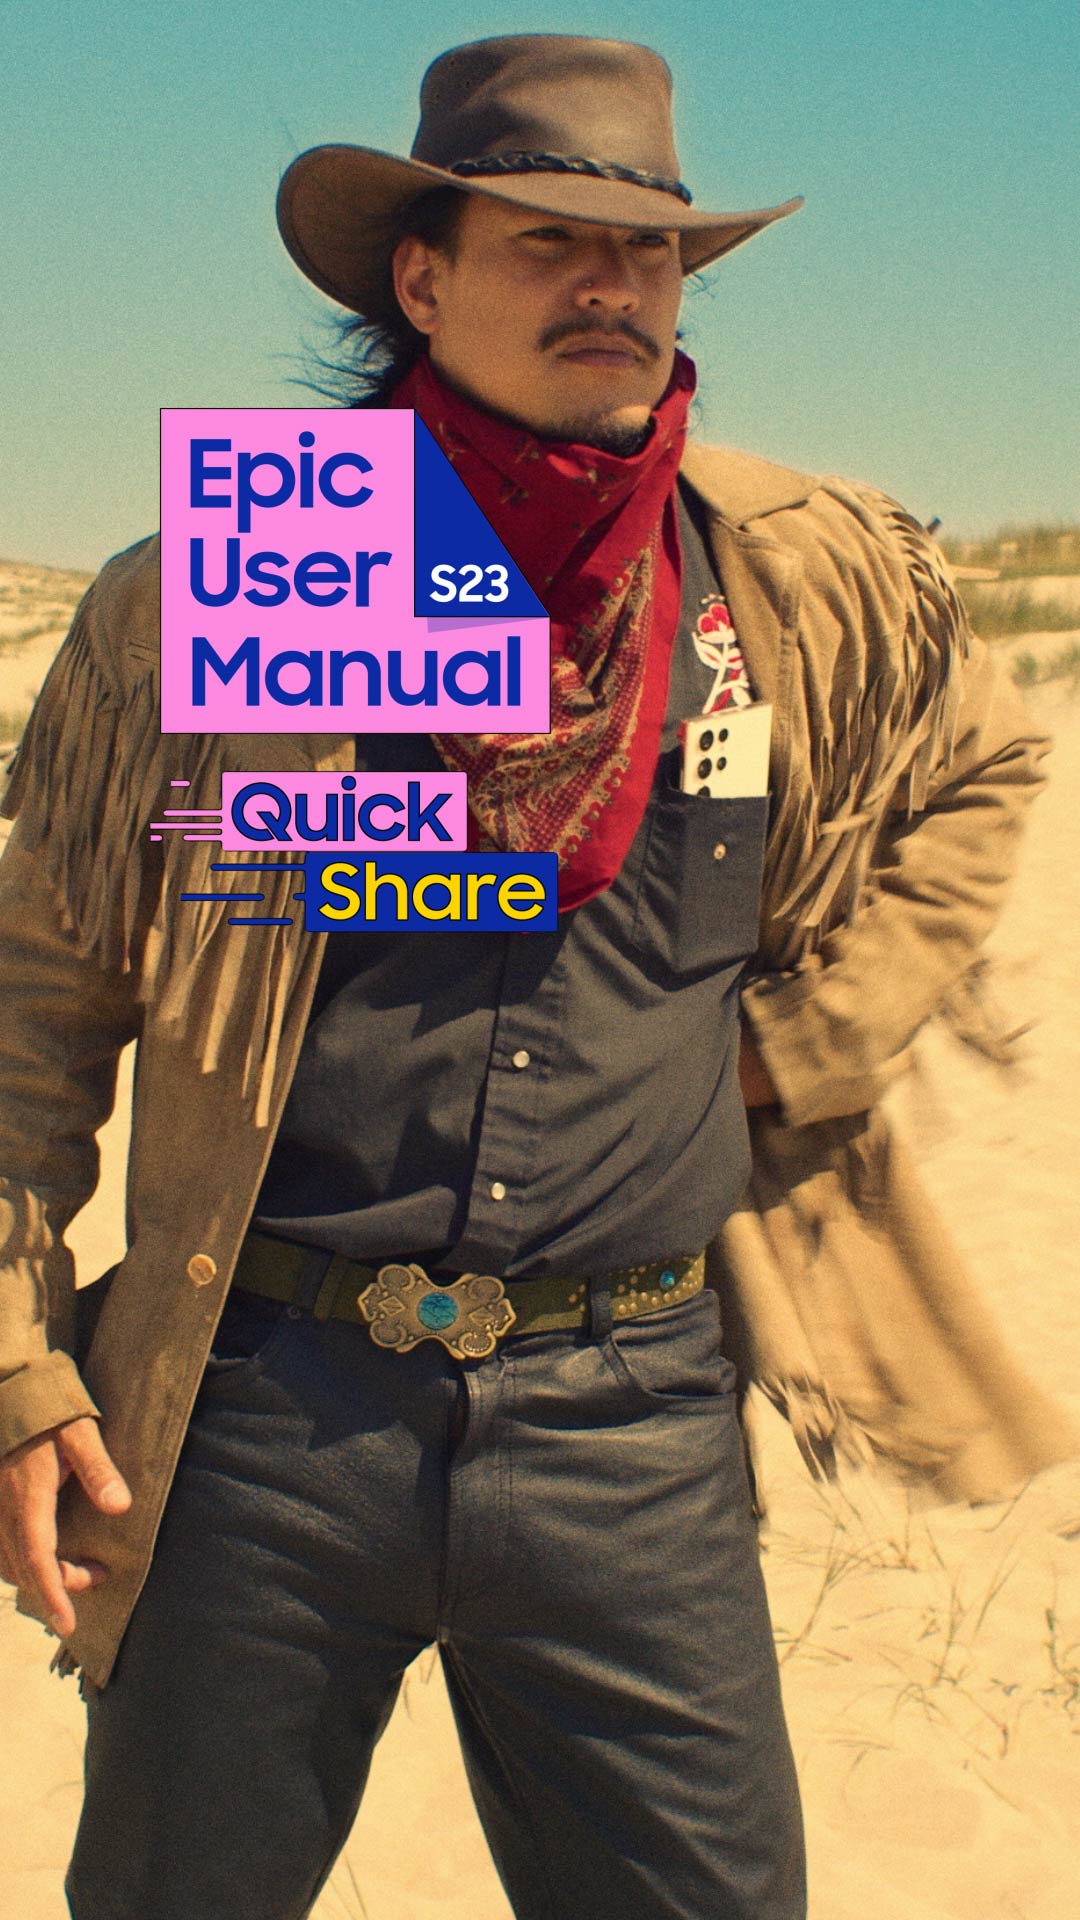 Epic User Manual